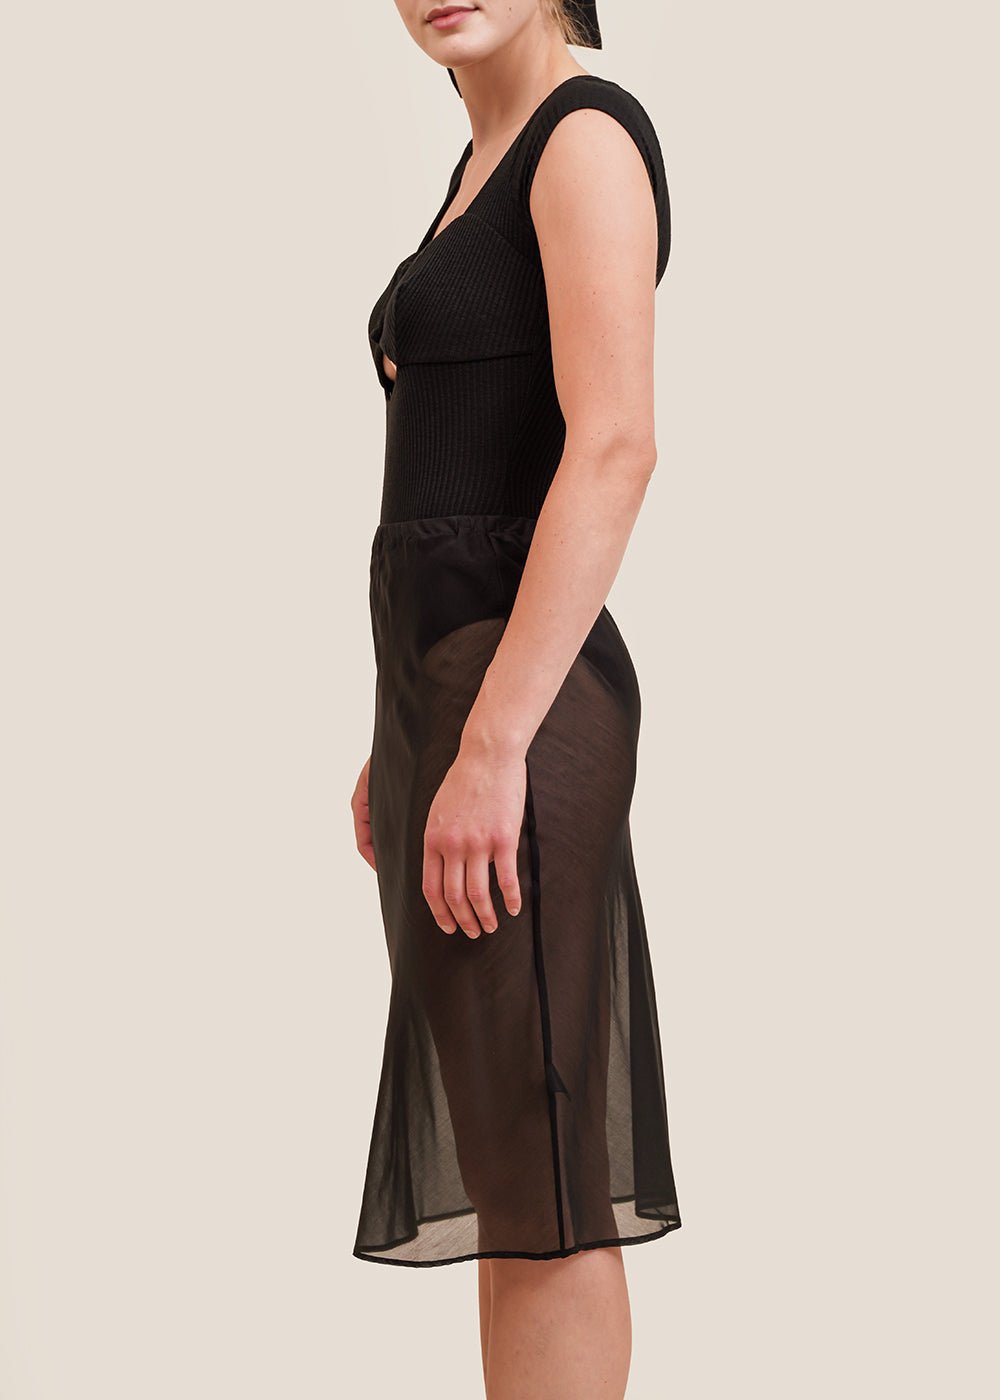 Angie Bauer Black Sarah Bodysuit - New Classics Studios Sustainable Ethical Fashion Canada